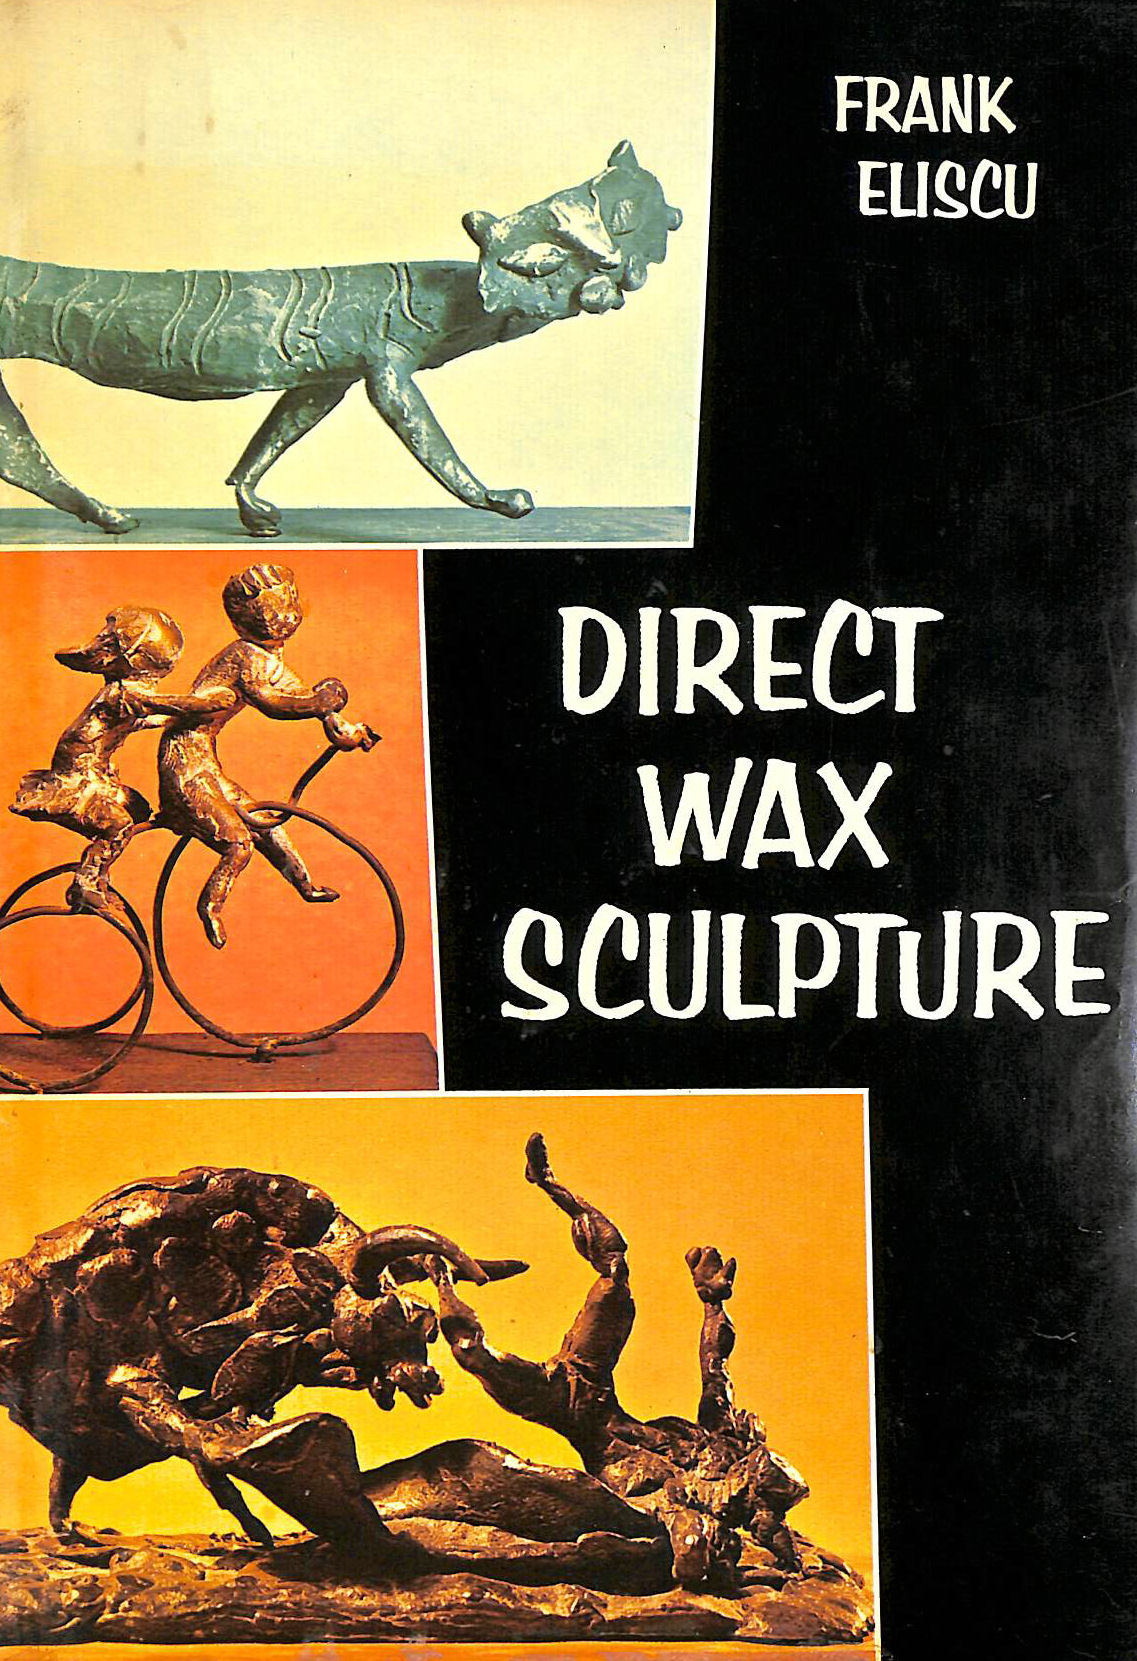 FRANK ELISCU - Direct Wax Sculpture